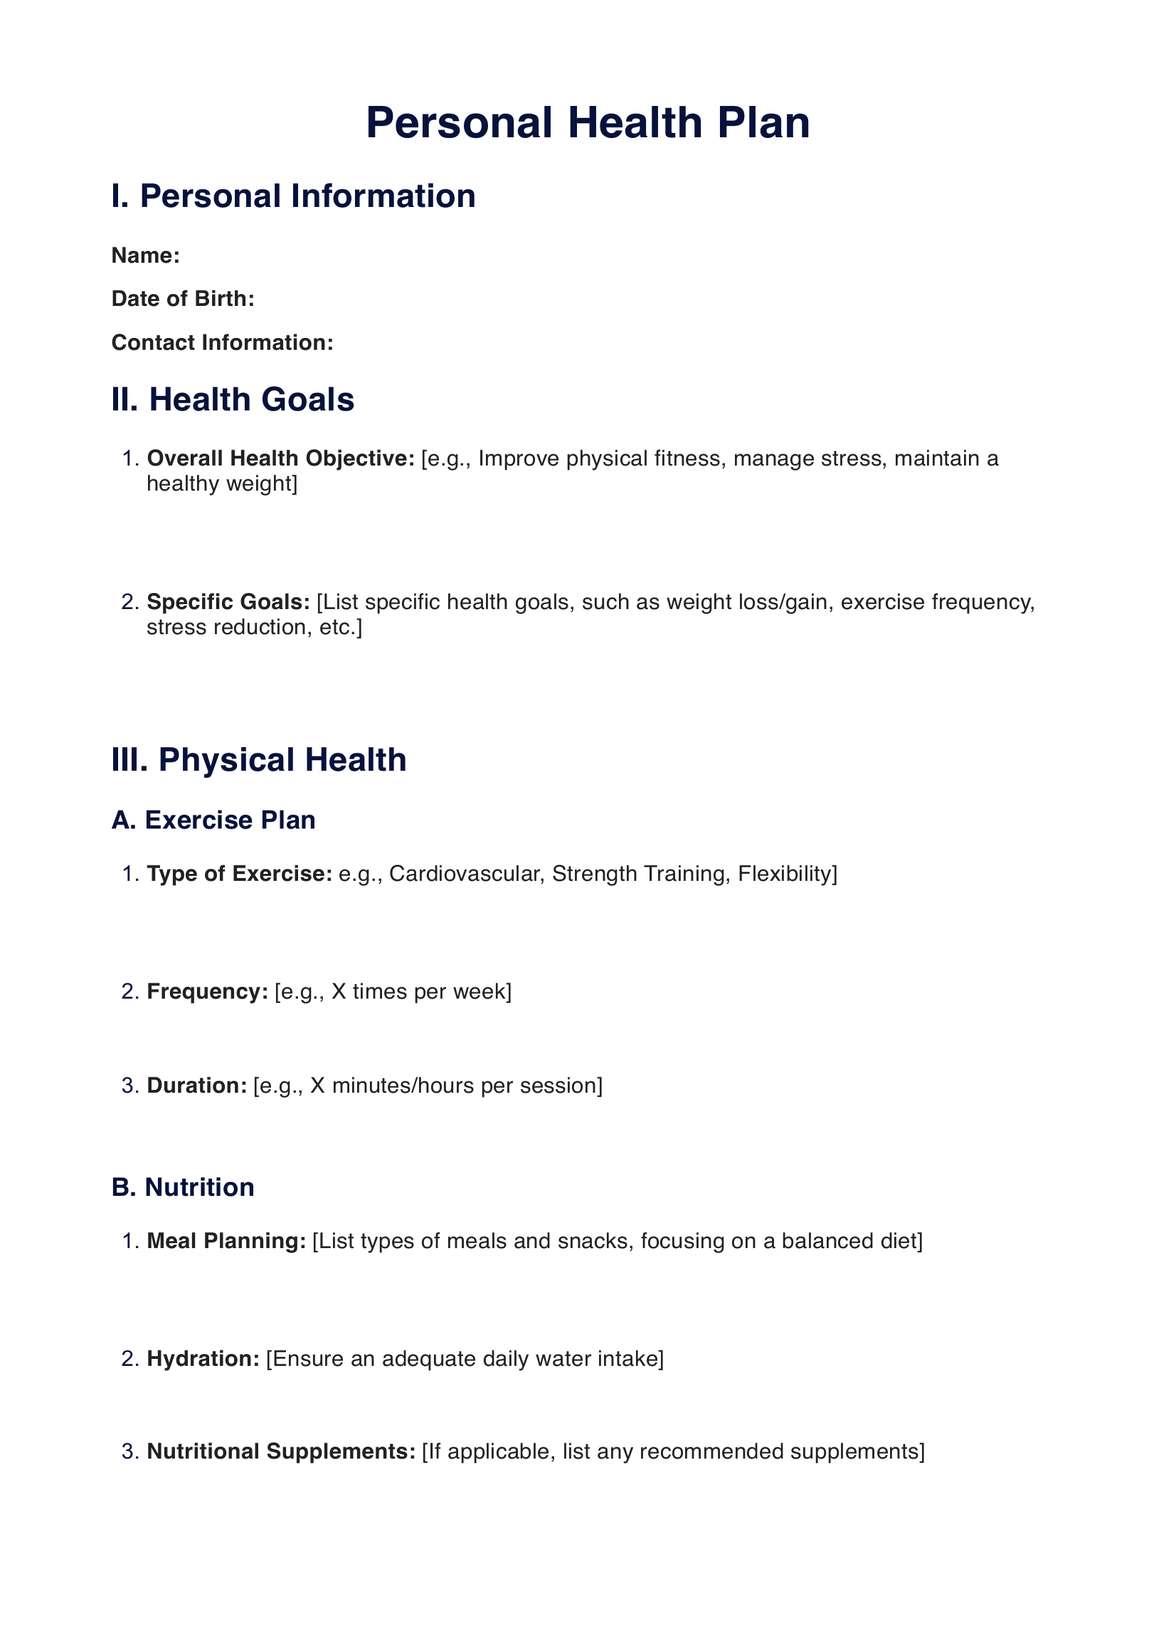 Personal Health Plan PDF Example